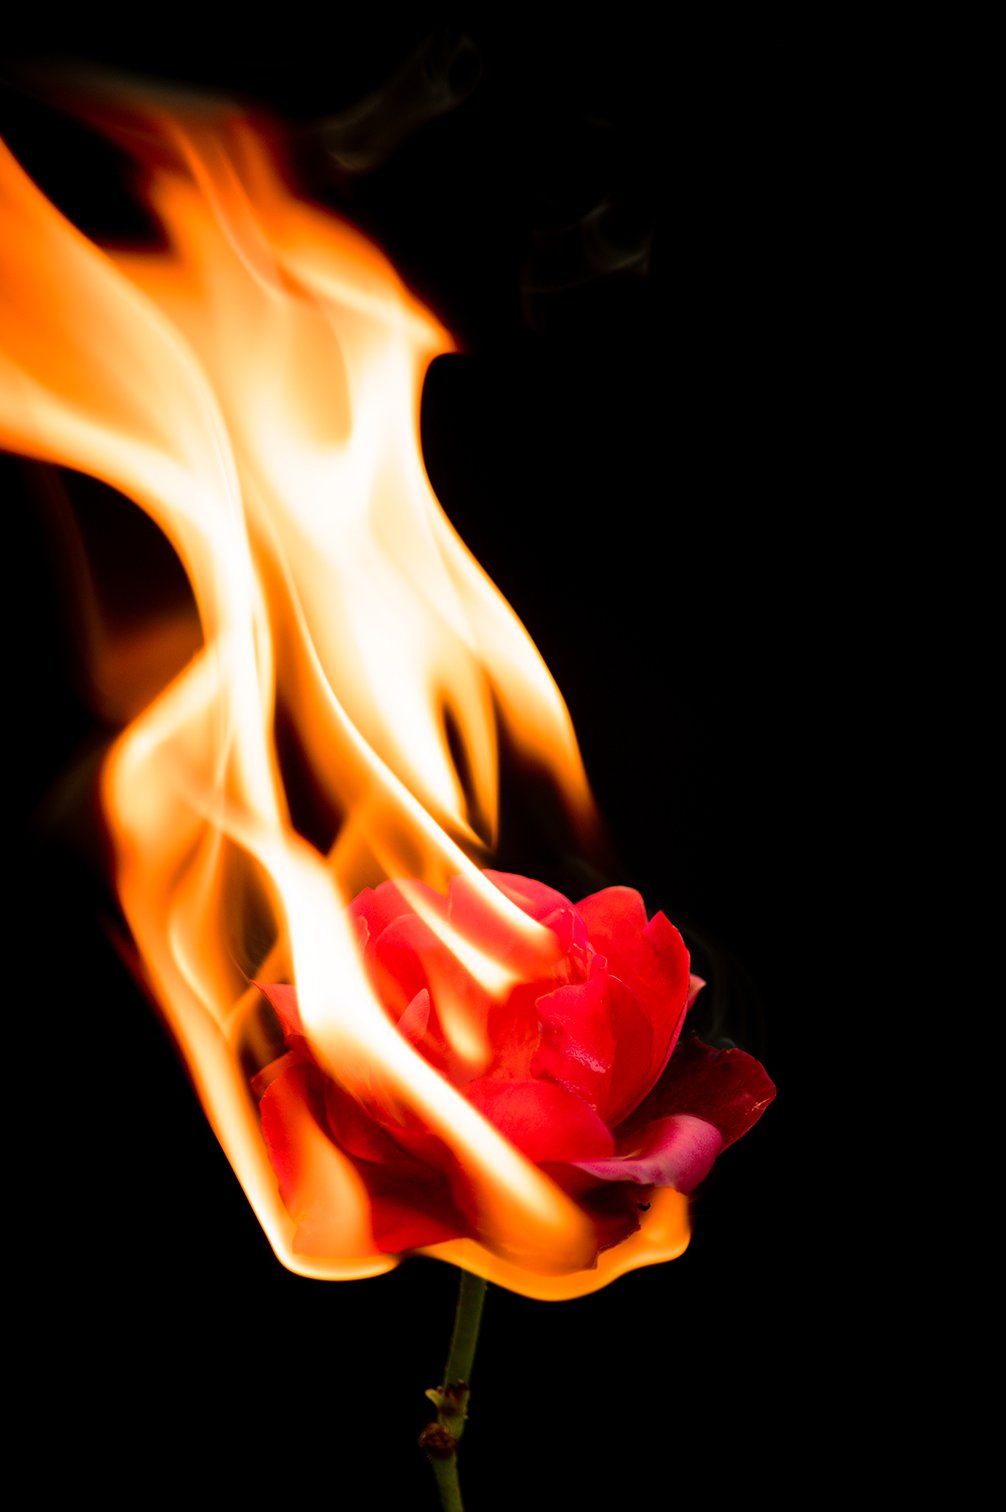 Rose on fire1.jpg